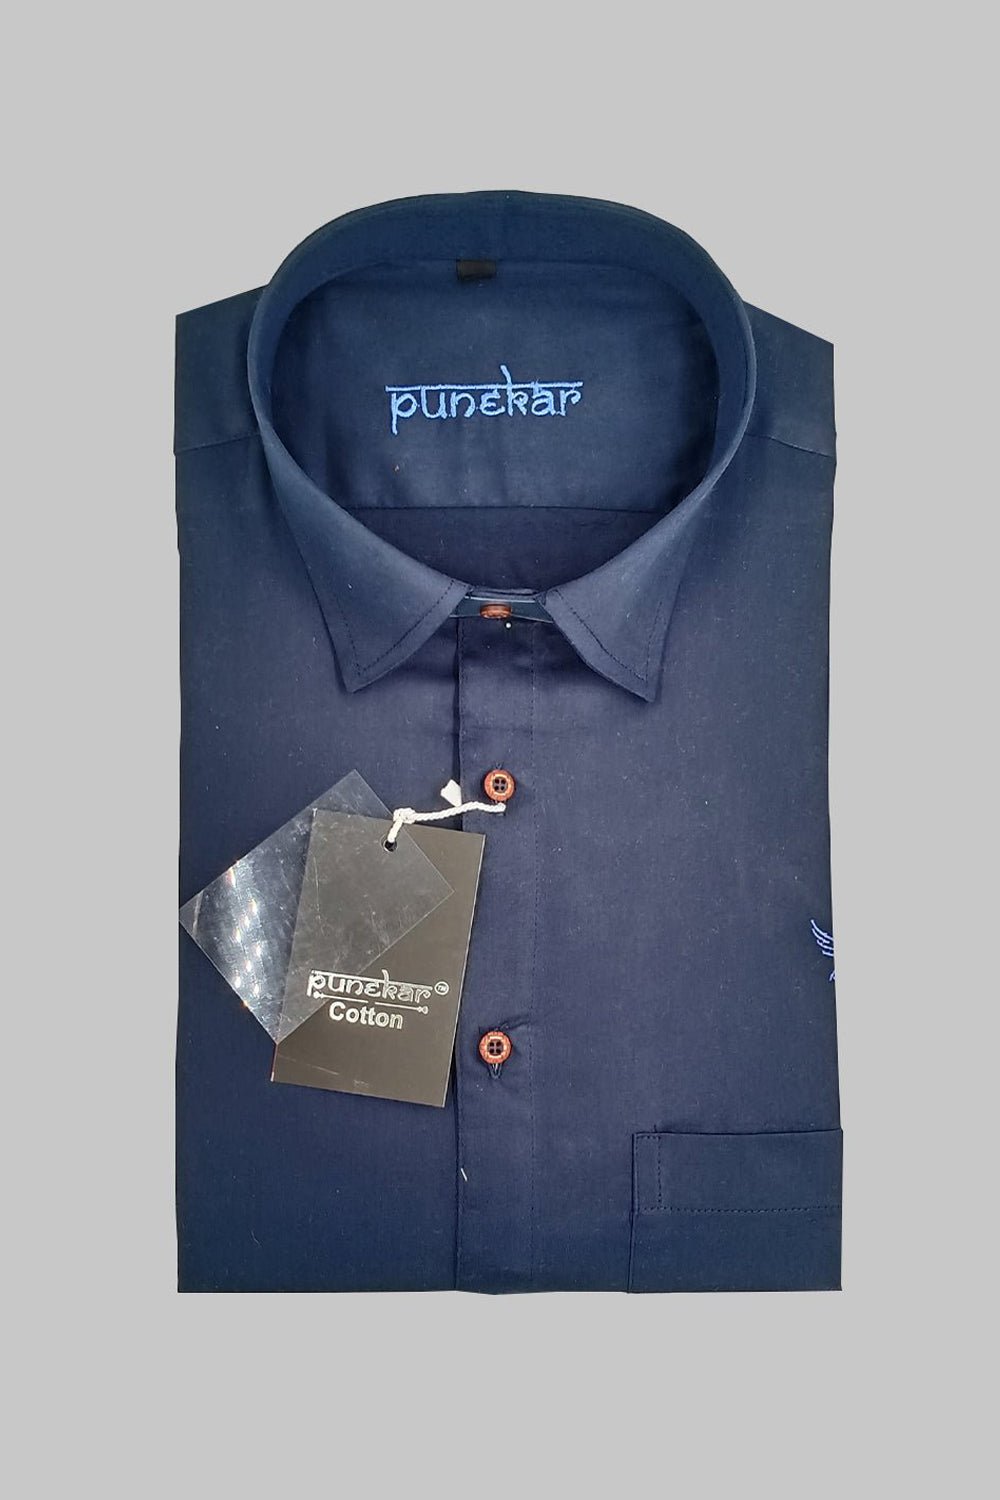 Punekar Cotton Satin Navy Blue Color Full Sleeves Formal Shirt for Men&